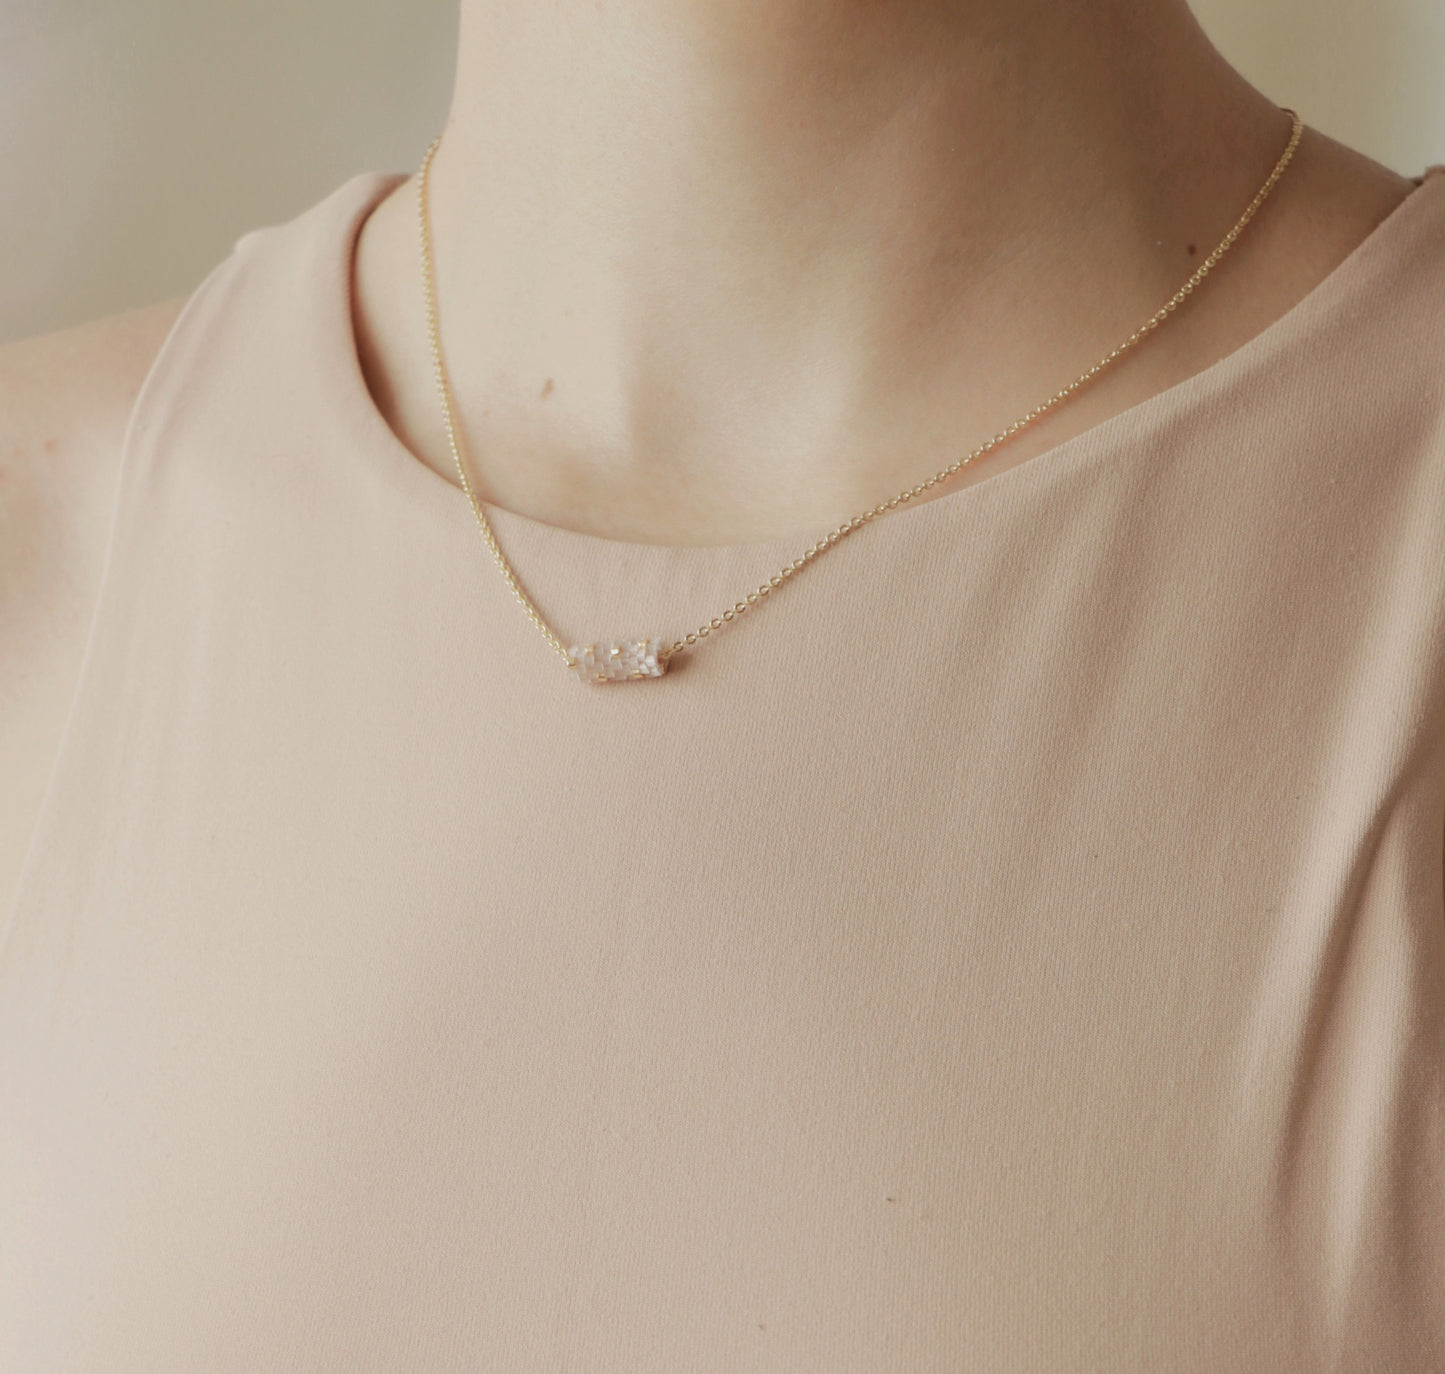 Completa /necklace